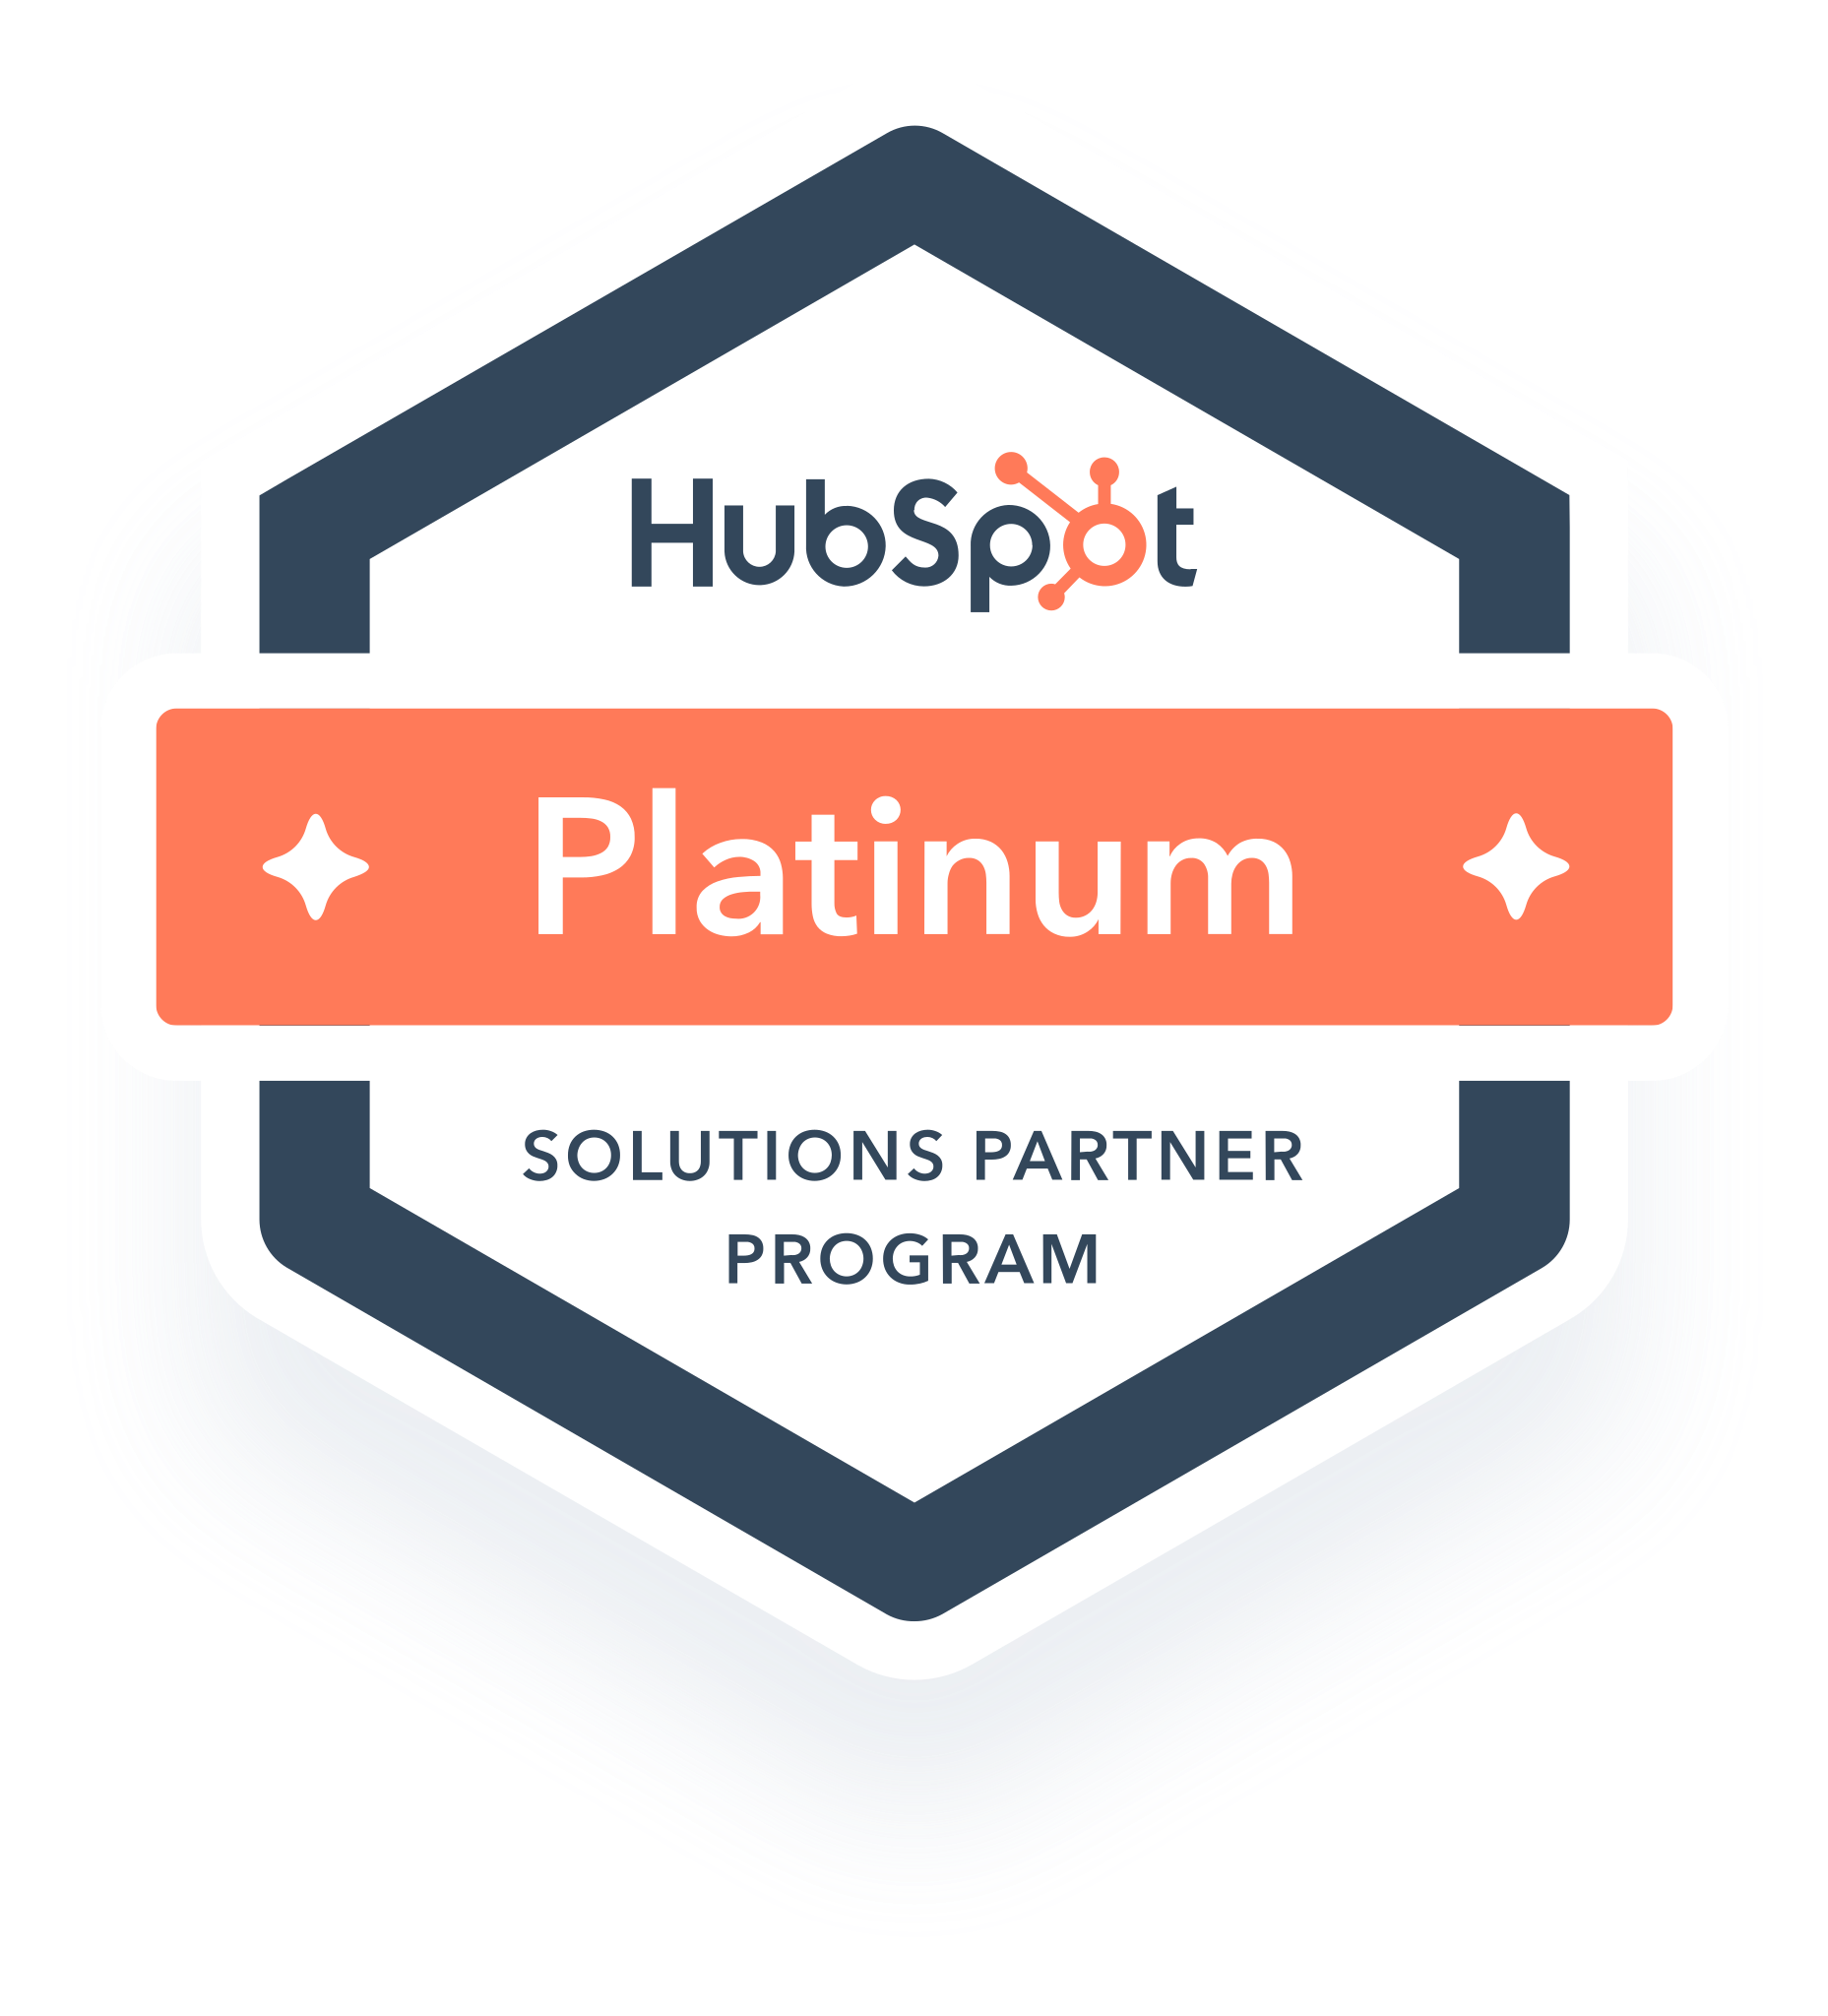 HubSpot-Certified-Partner